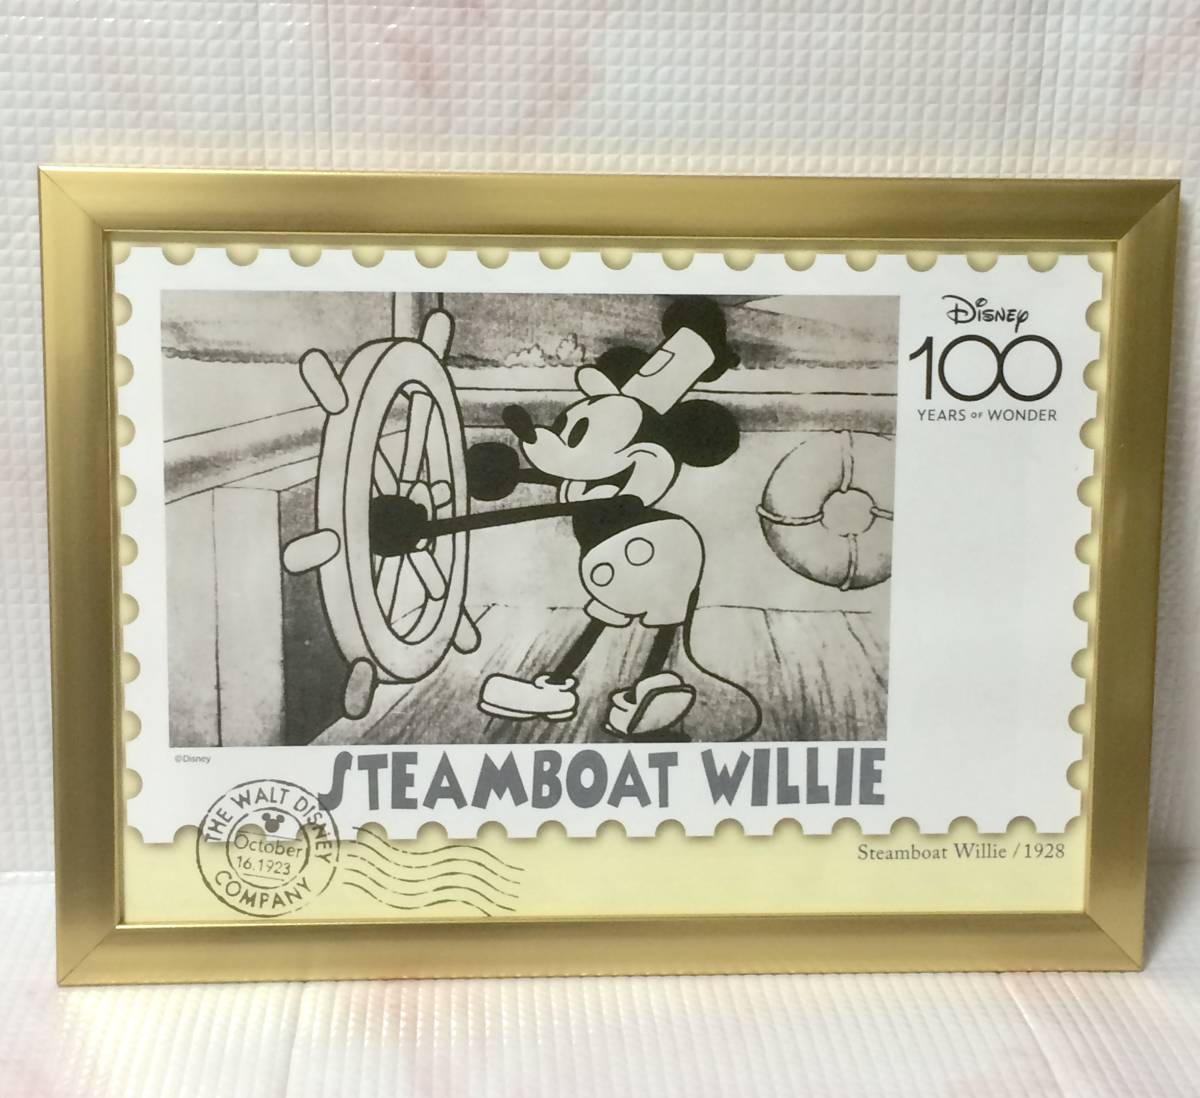 [ бесплатная доставка ] Disney 100| Anniversary коллекция [ пар судно Willie ].. газета сумма . серии ( сумма ввод ) новый товар 